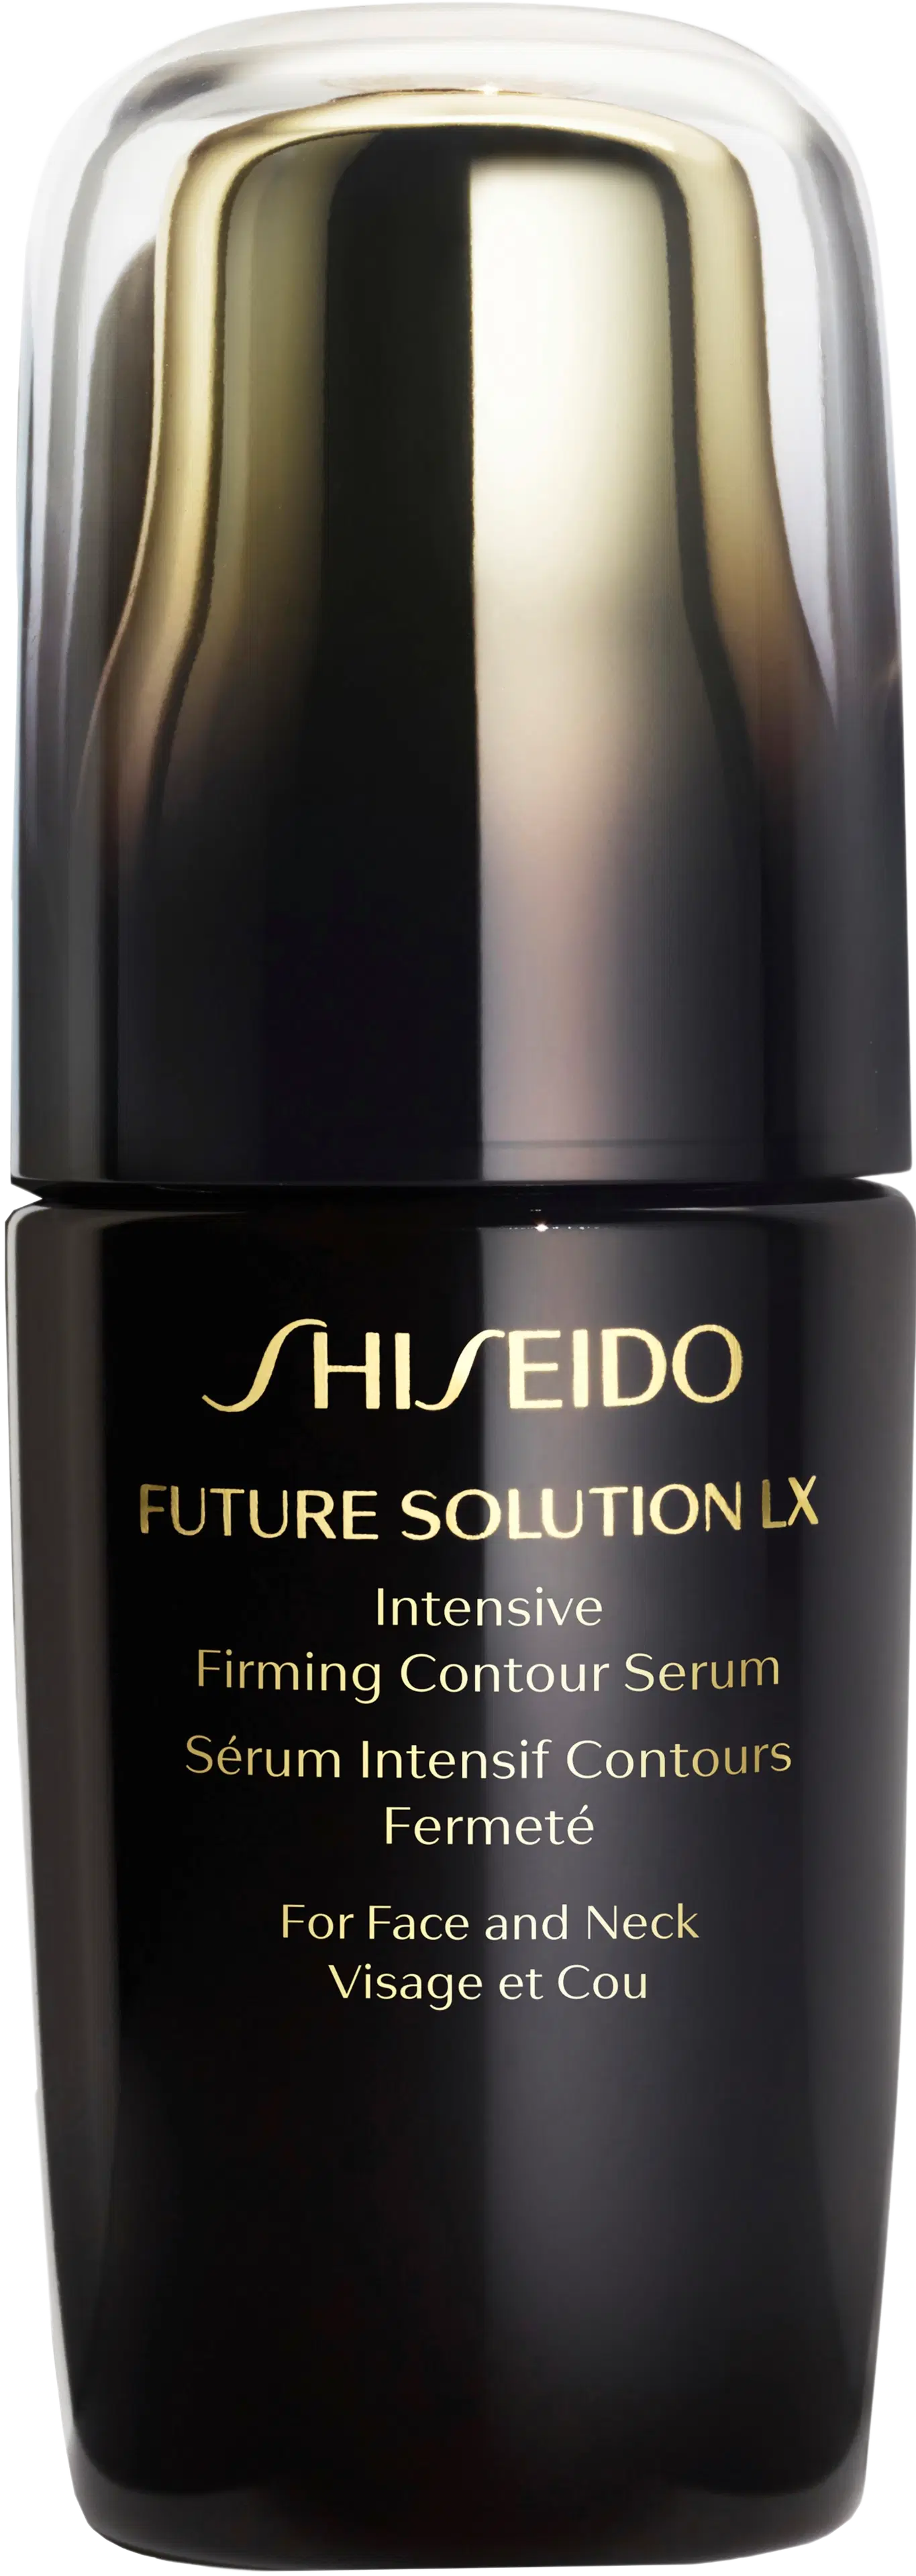 Shiseido Future Solution LX Firming Contour Seerumi 50 ml